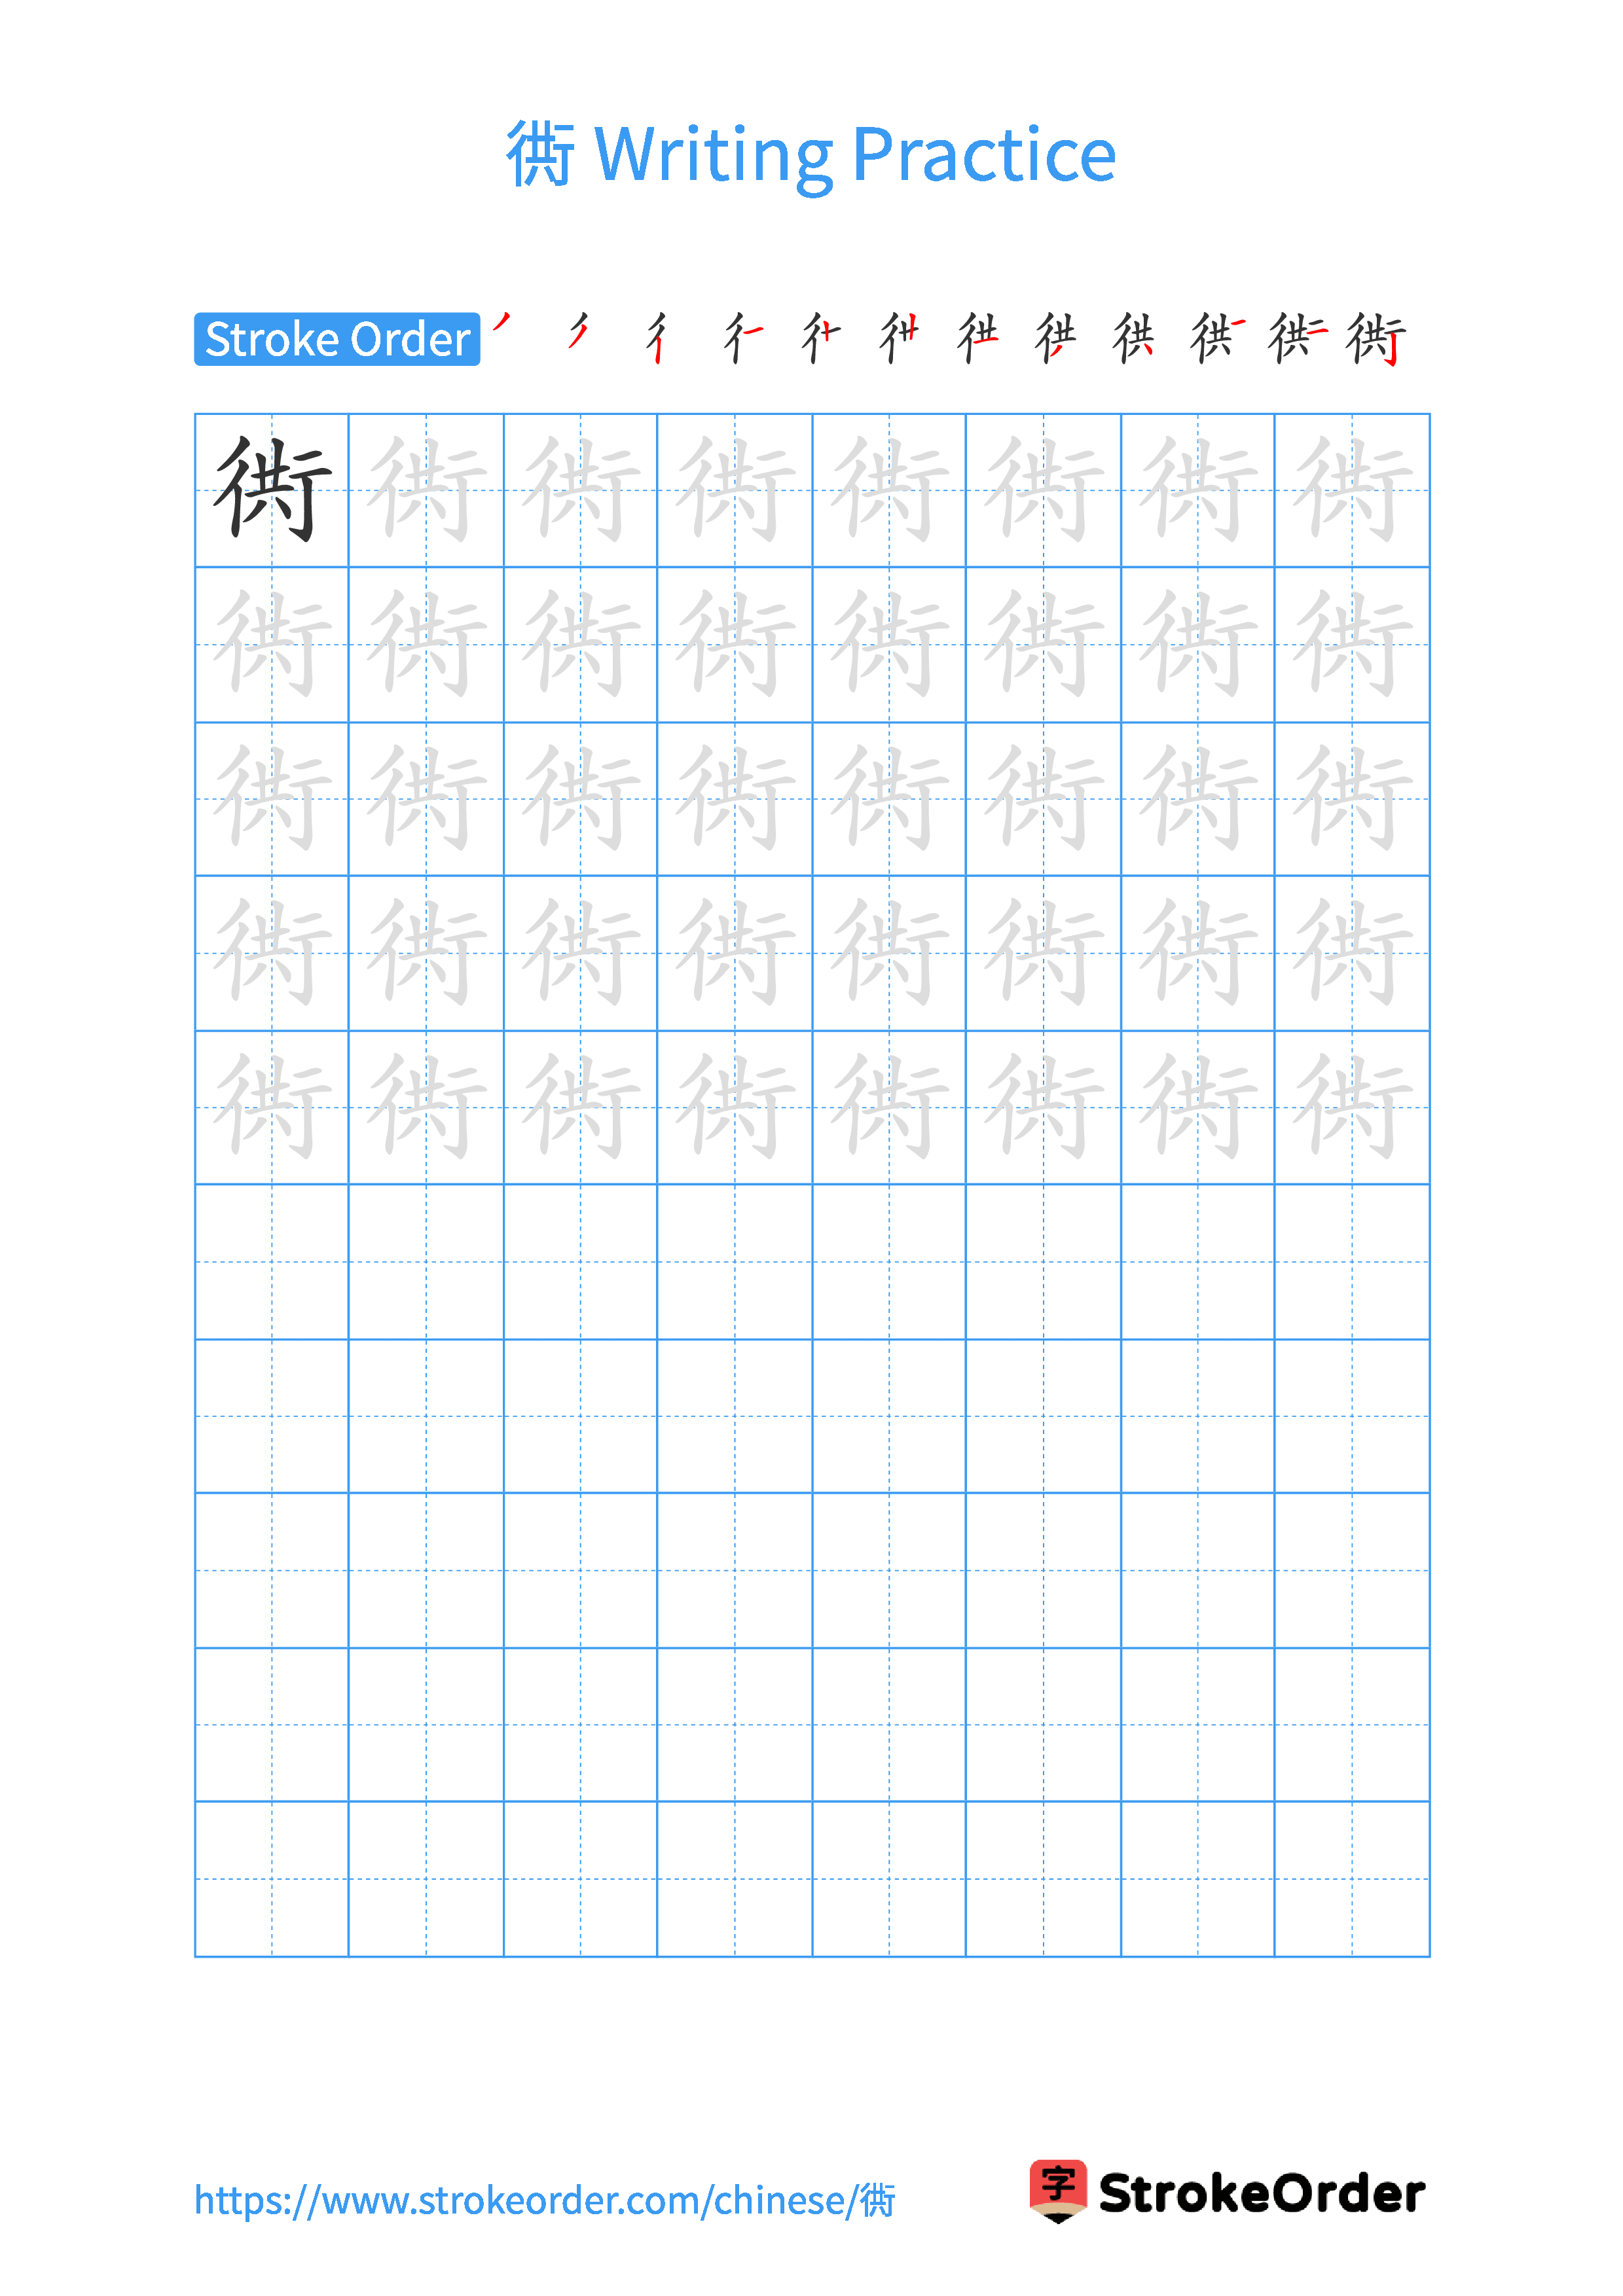 Printable Handwriting Practice Worksheet of the Chinese character 衖 in Portrait Orientation (Tian Zi Ge)